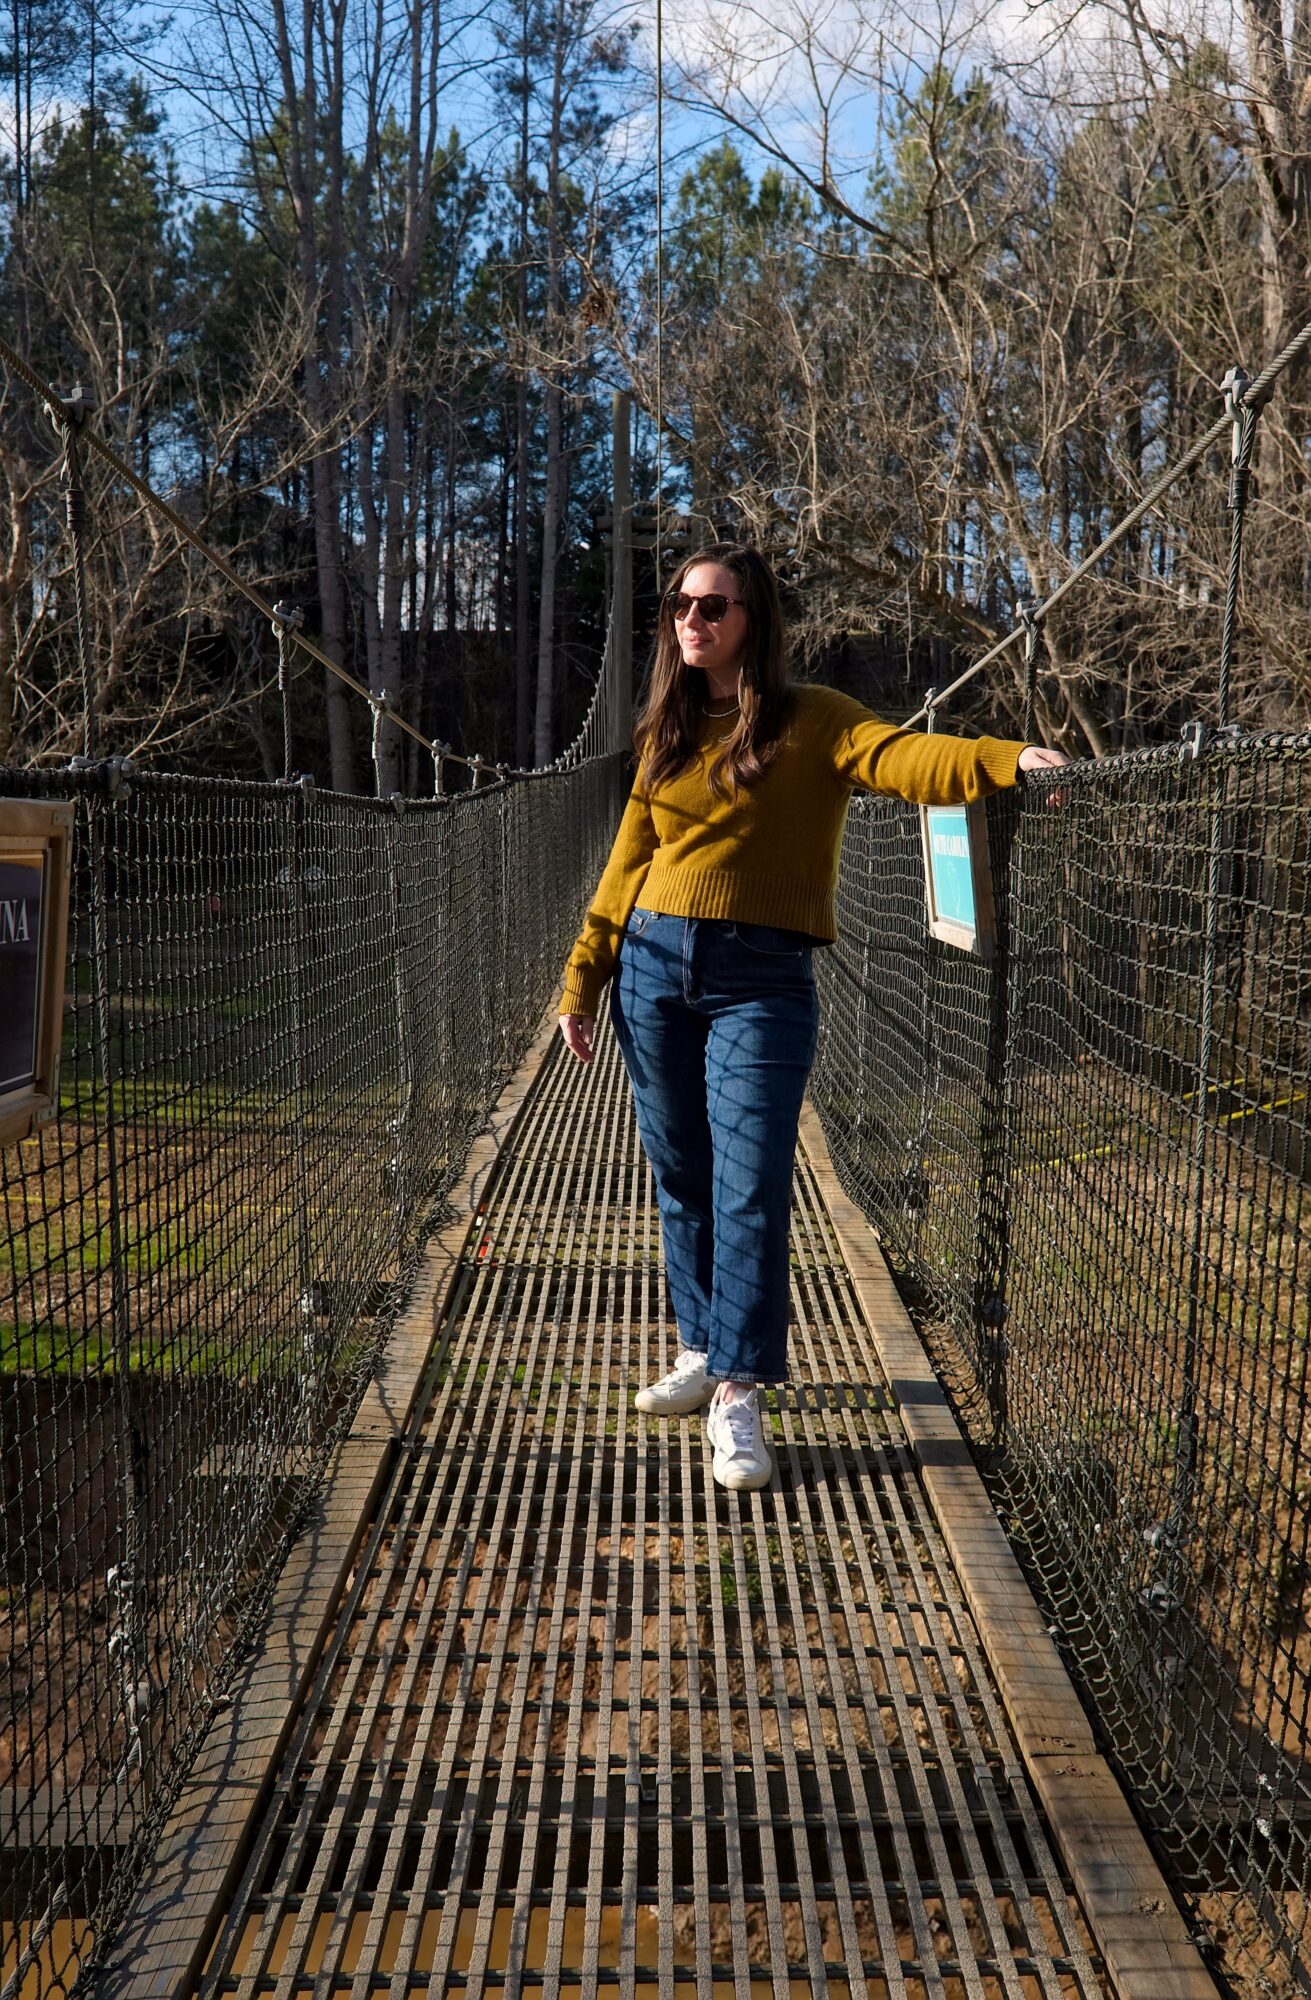 Alyssa stands on a suspension bridge on the NC/SC border